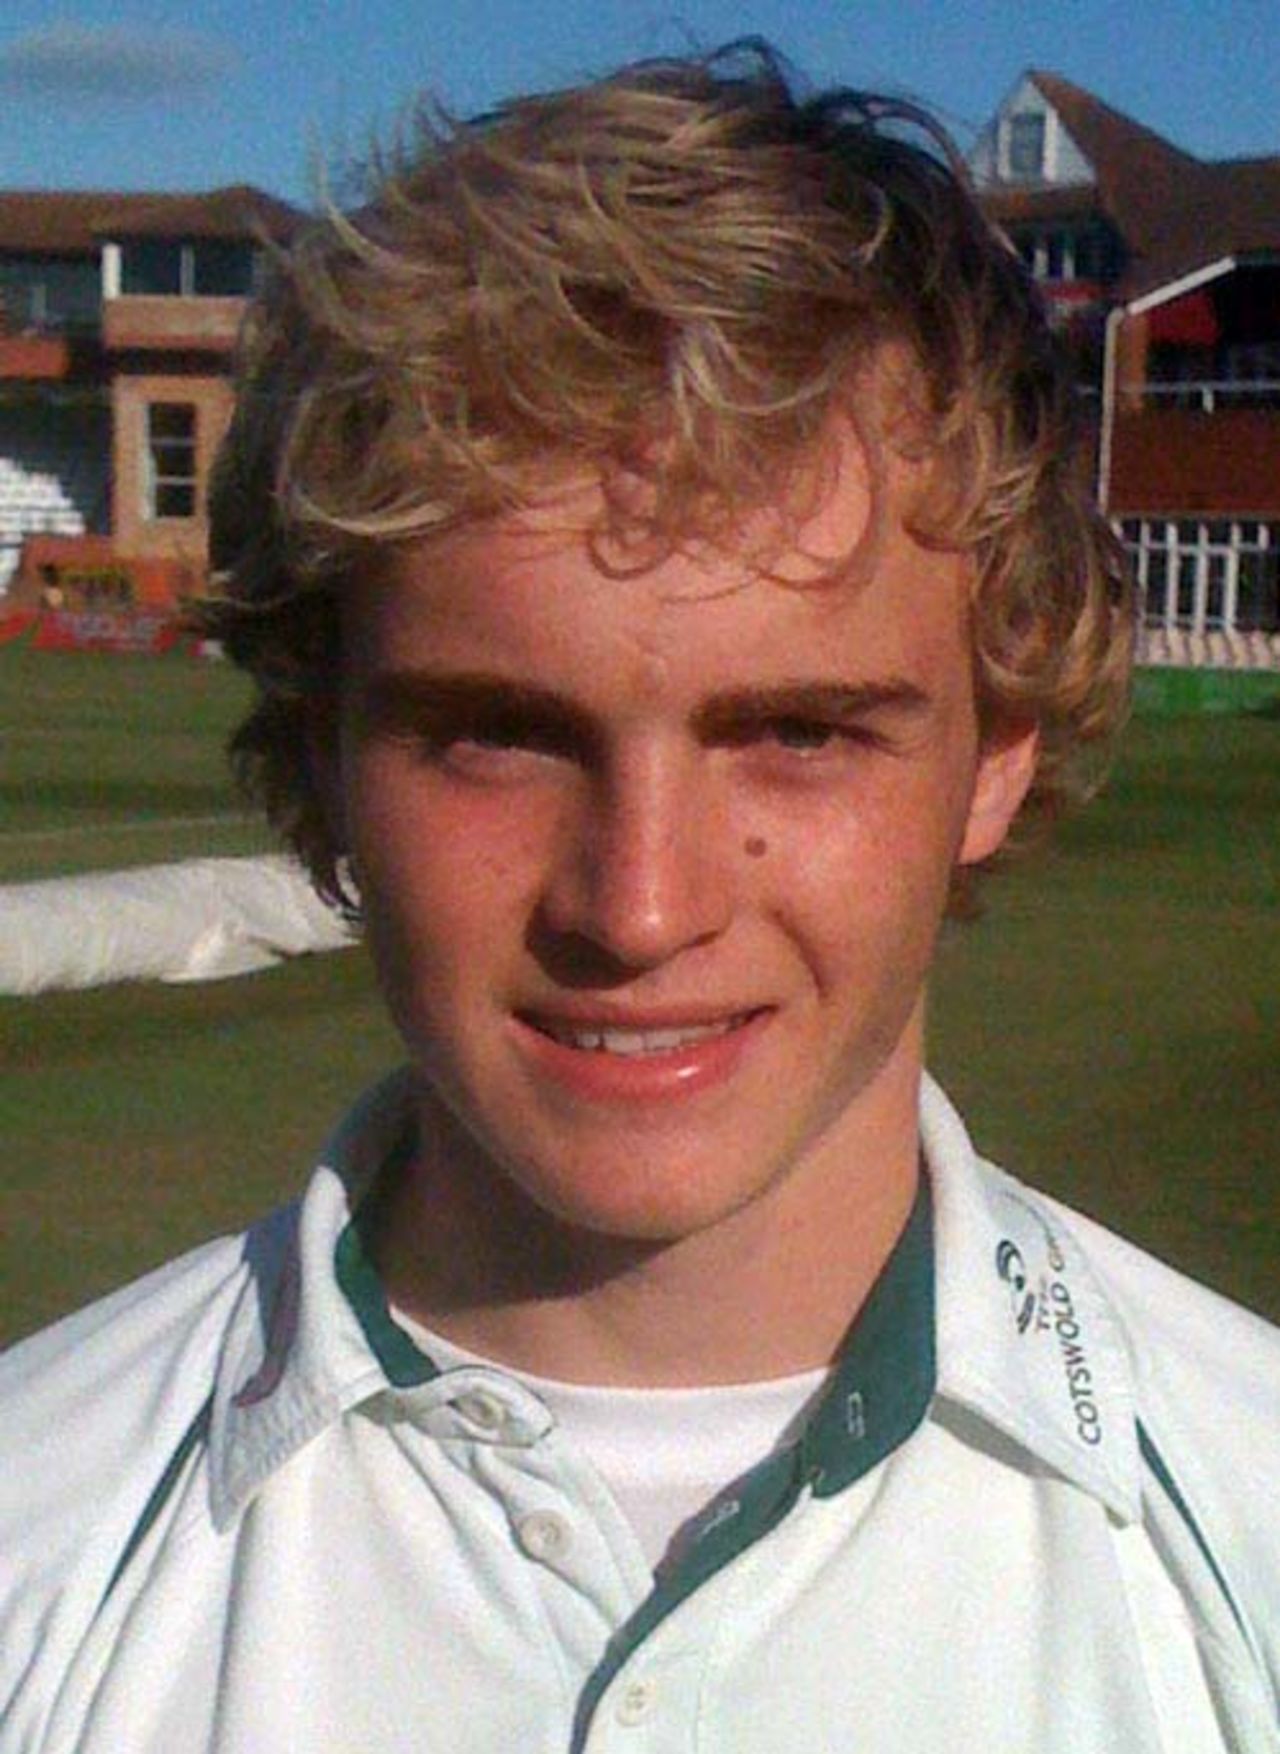 Ben Cox, player portrait